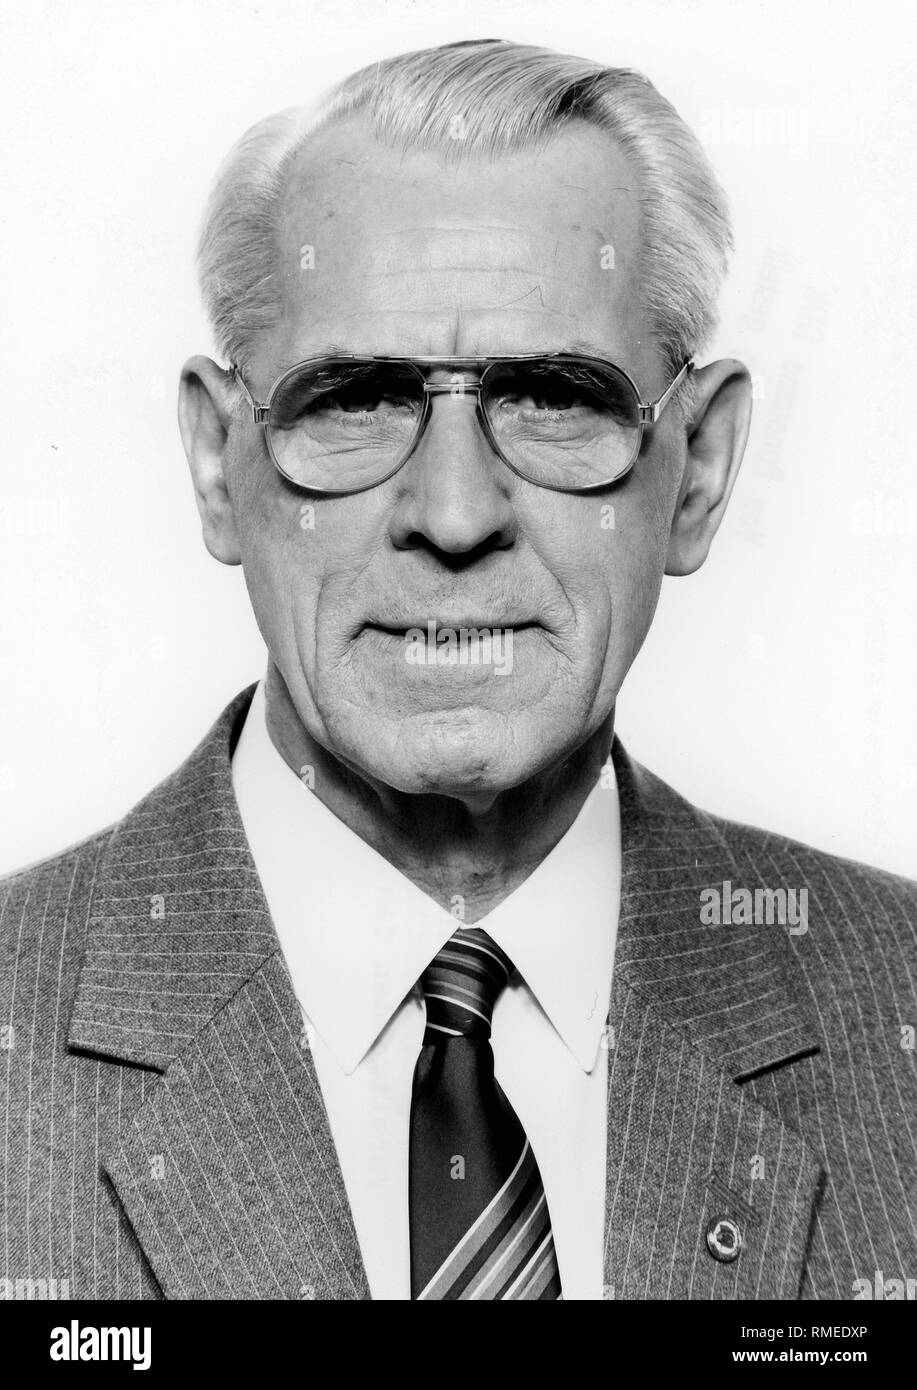 Willi Stoph, (09.07.1914 - 13.04.1999), entre 1953 - 1989 Membre du Bureau politique du SED, entre 1956 - 1960 Ministre de la défense de la RDA, entre 1964 - 1973 Premier Ministre de la RDA, entre 1973 - 1976 Président du Conseil d'état de la RDA, entre 1976 - 1989 Premier Ministre de la RDA. Banque D'Images